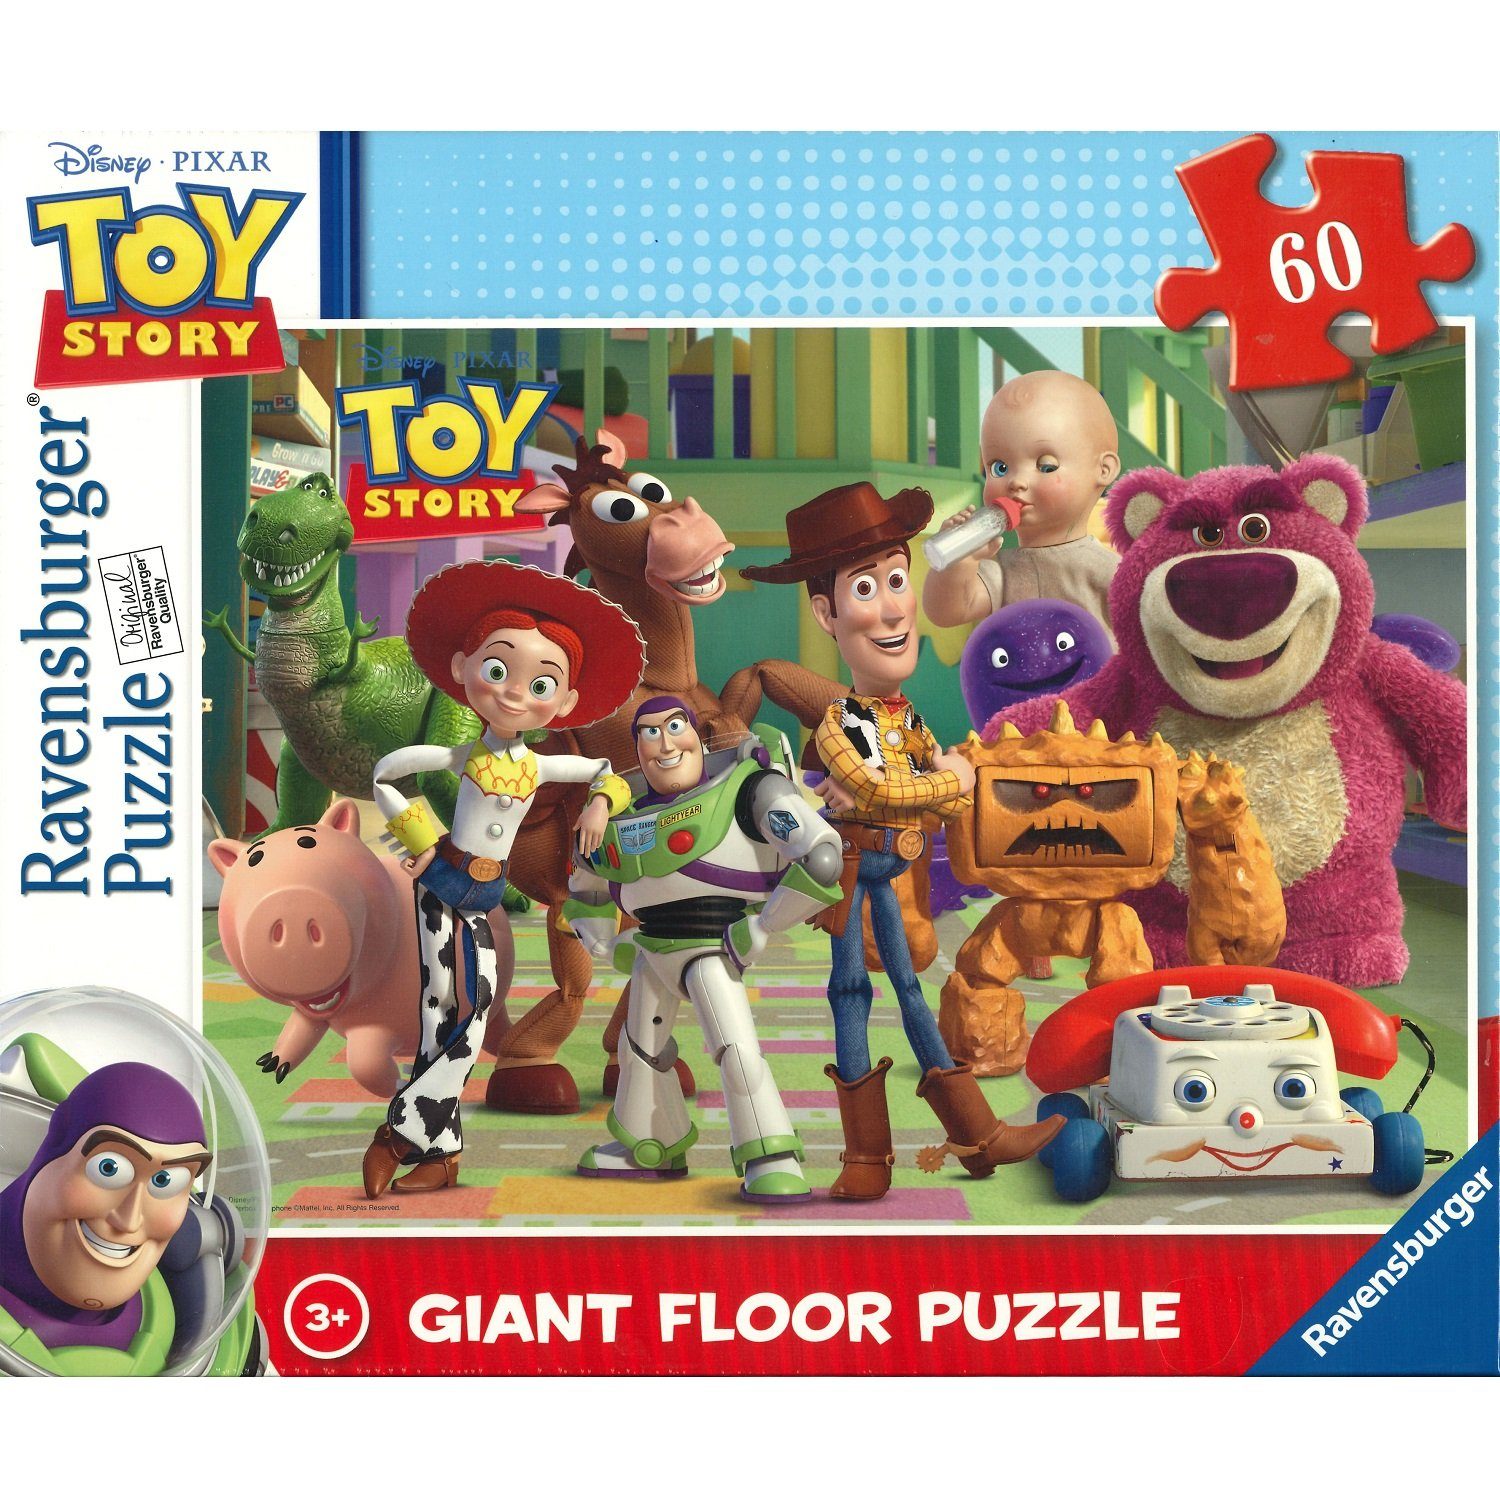 Ravensburger Puzzle Ravensburger - Disney Pixar Toy Story, 60 Puzzleteile, 60 Teile Giant Floor Puzzle